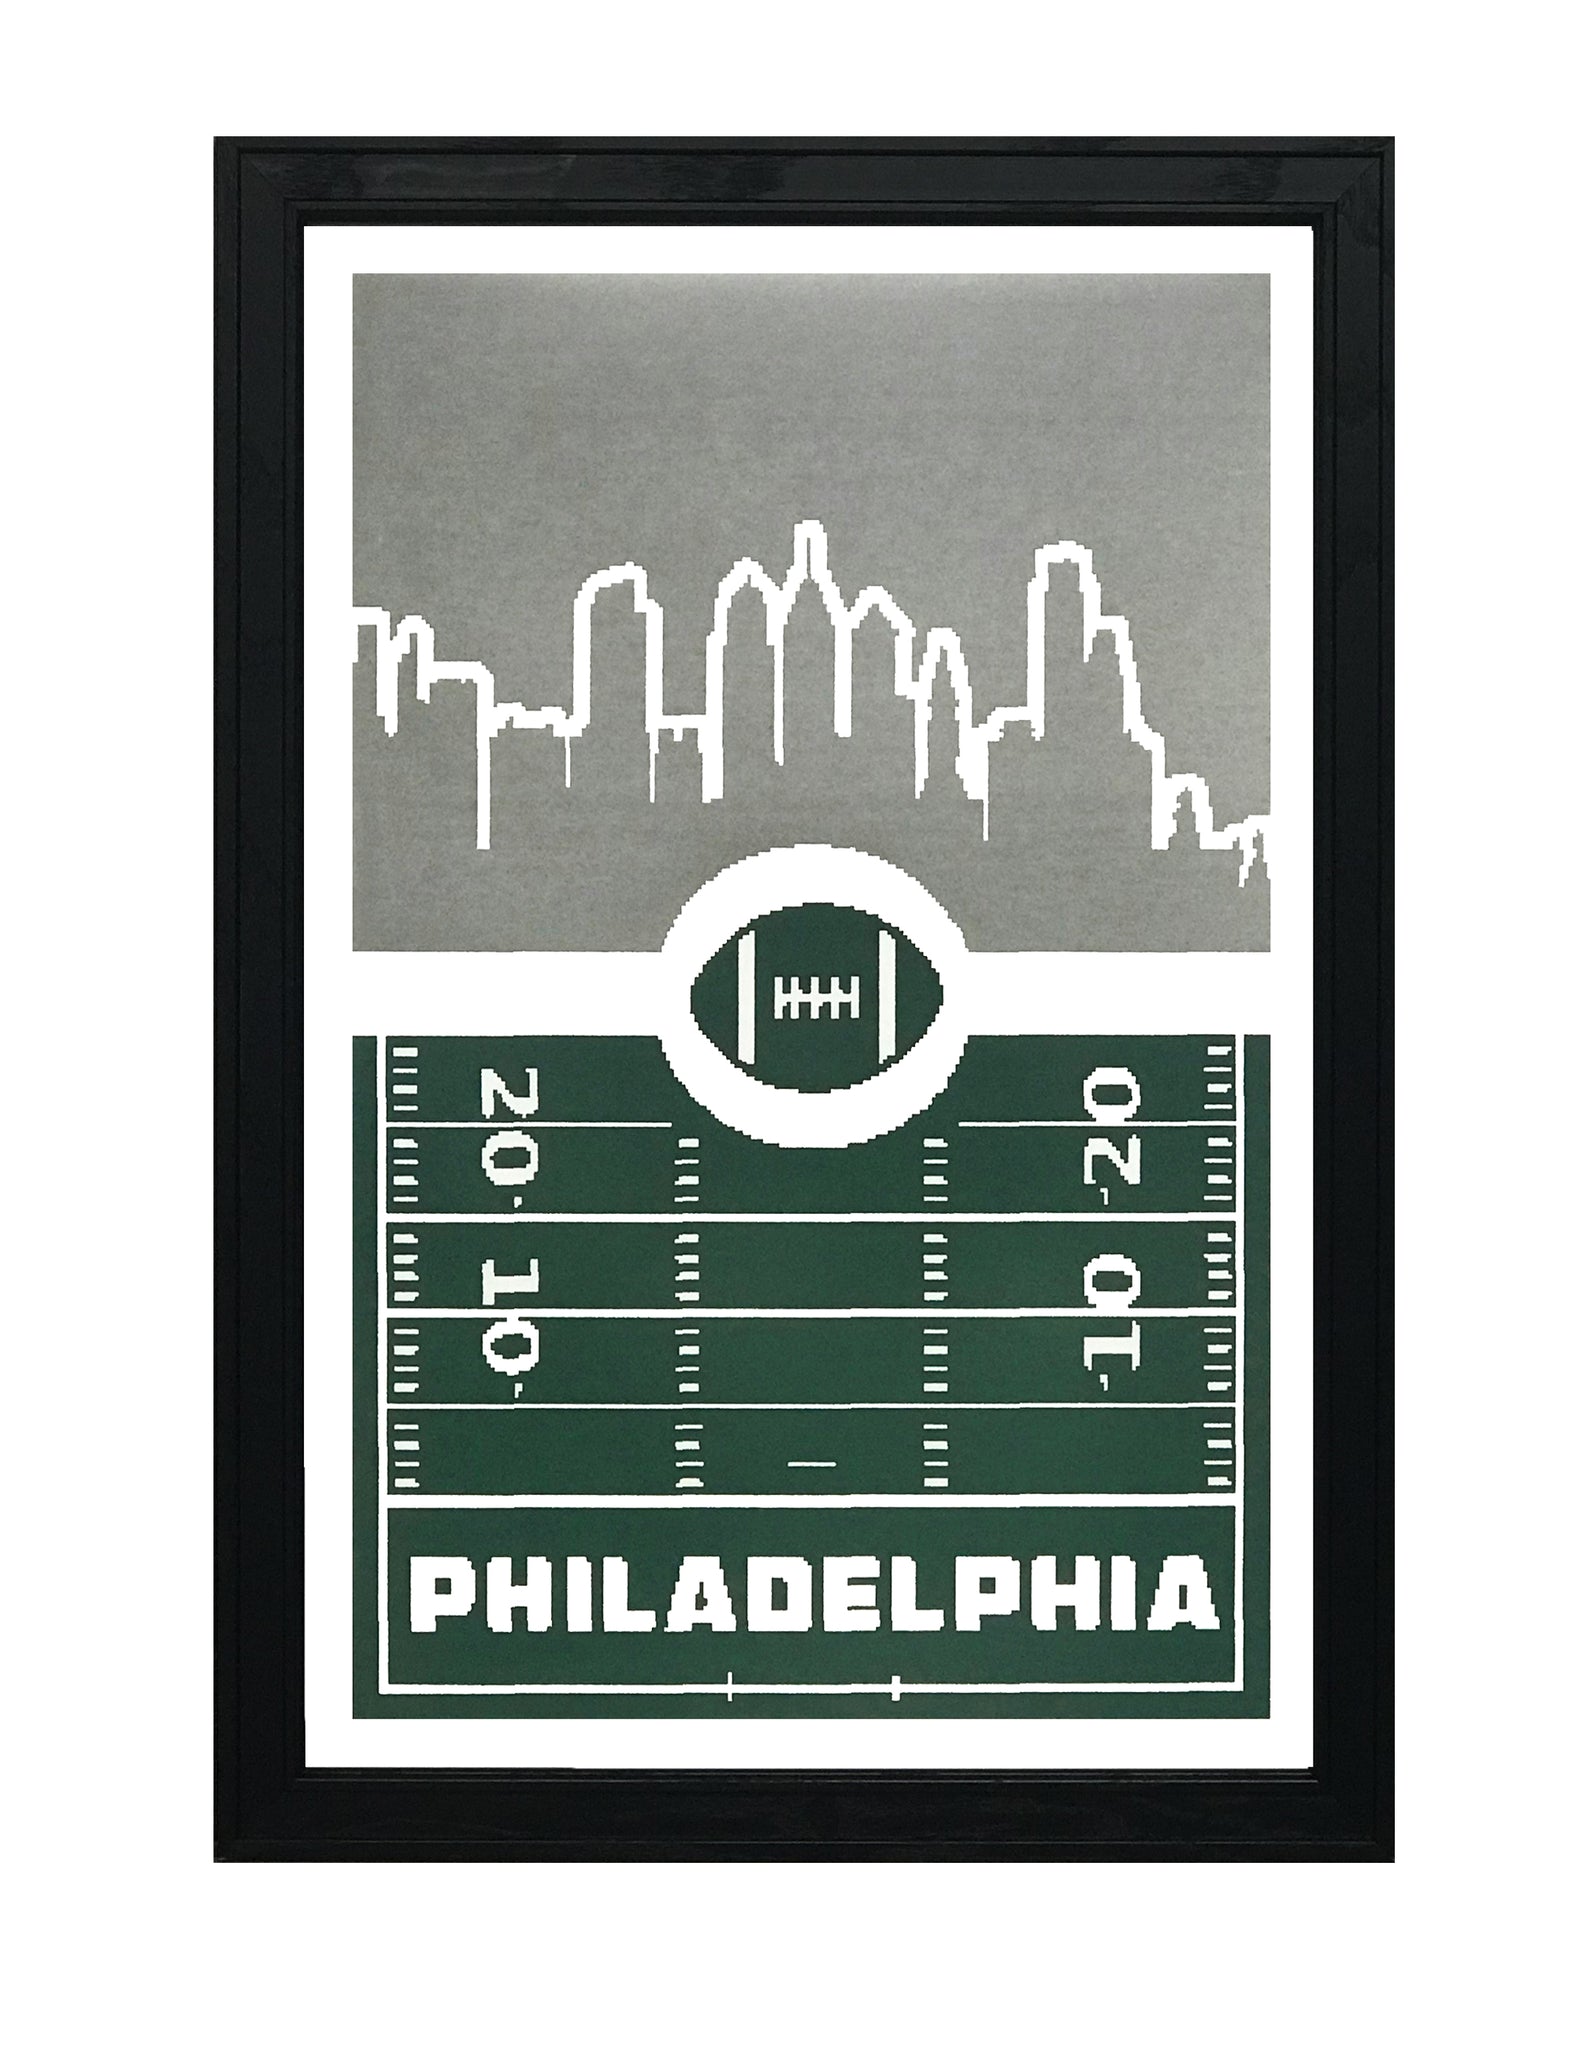 Limited Edition Philadelphia Eagles Poster - 8 Bit Retro Art Print - 1